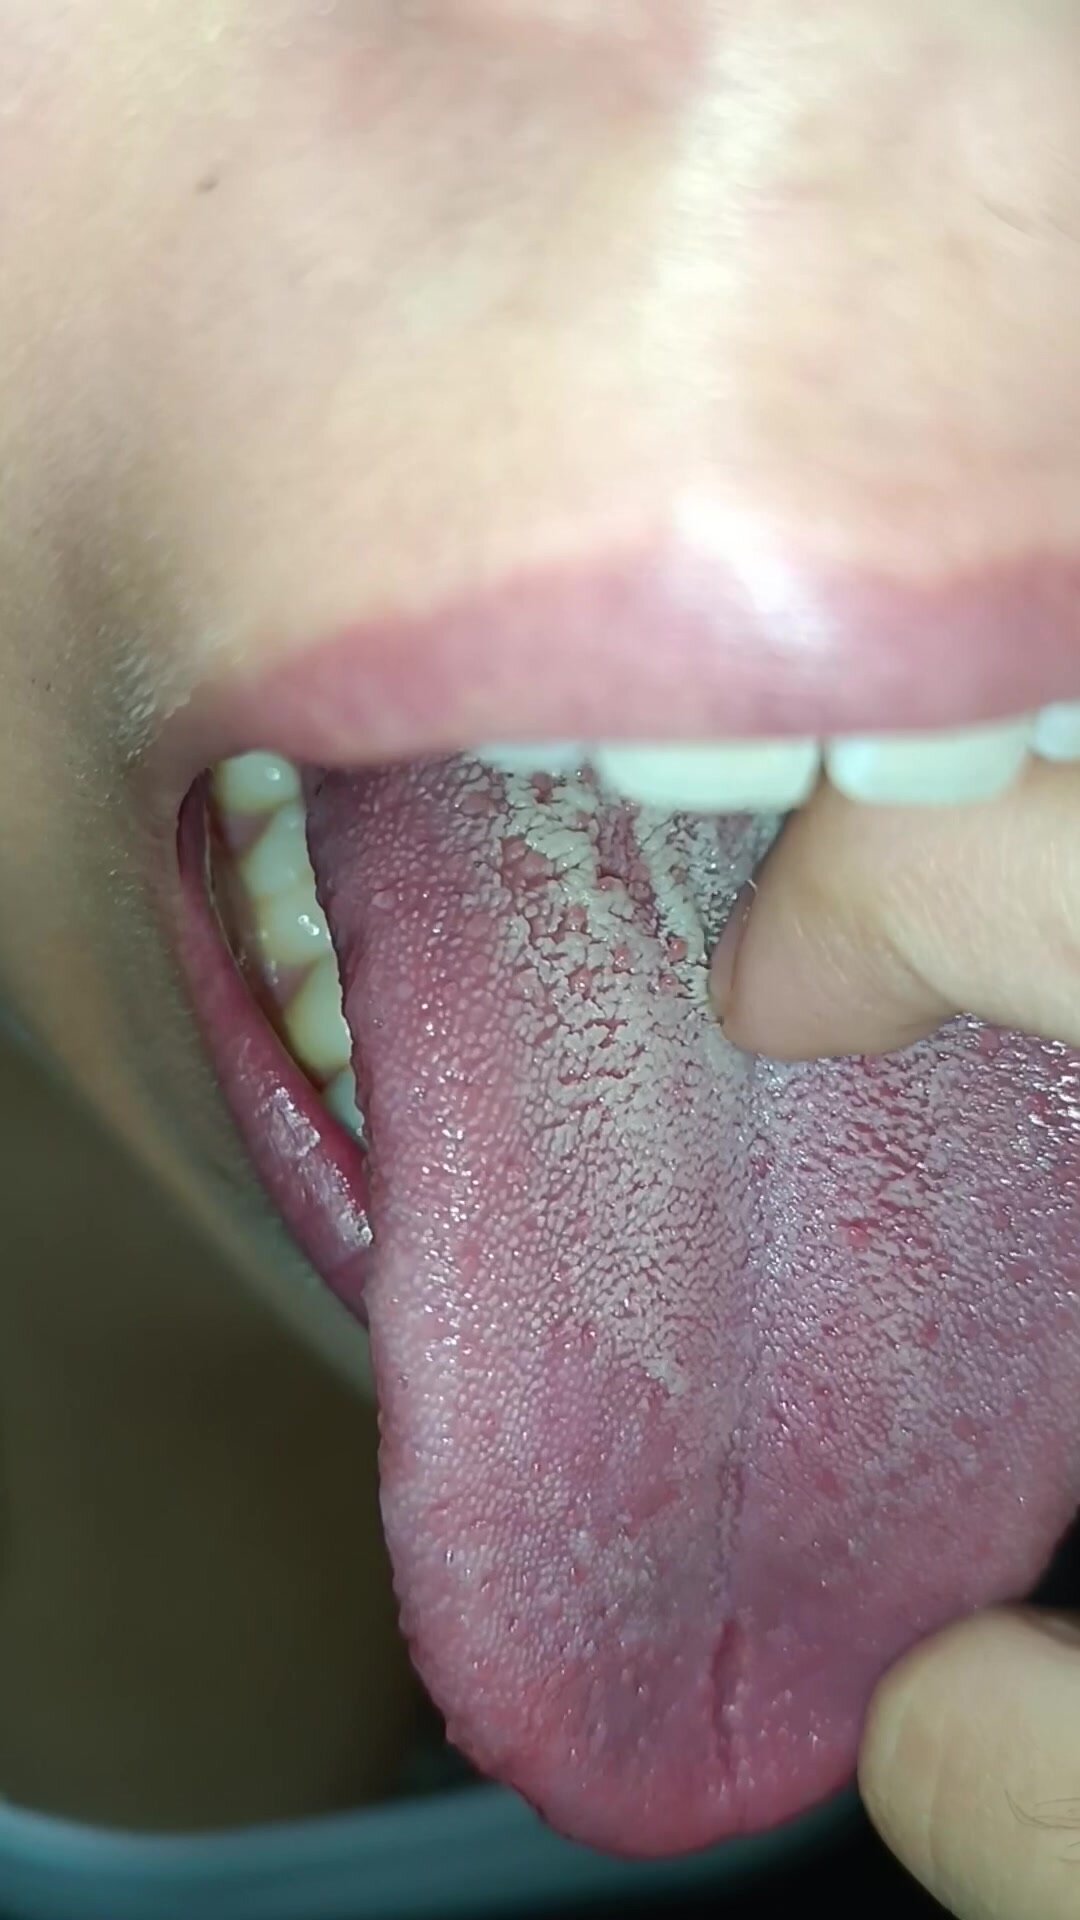 Long white tongue scraping